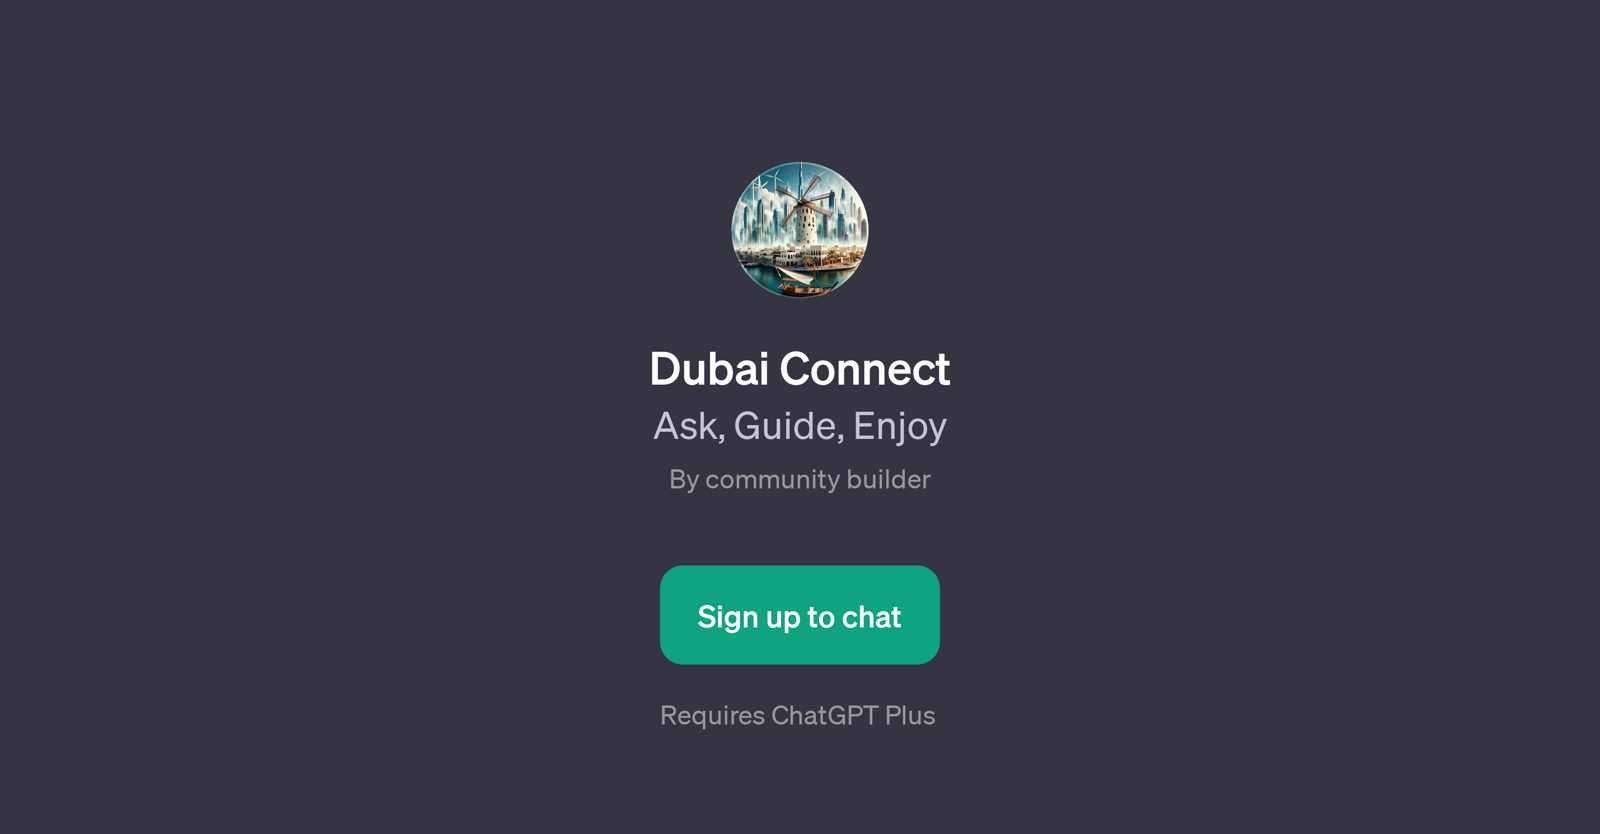 Dubai Connect website